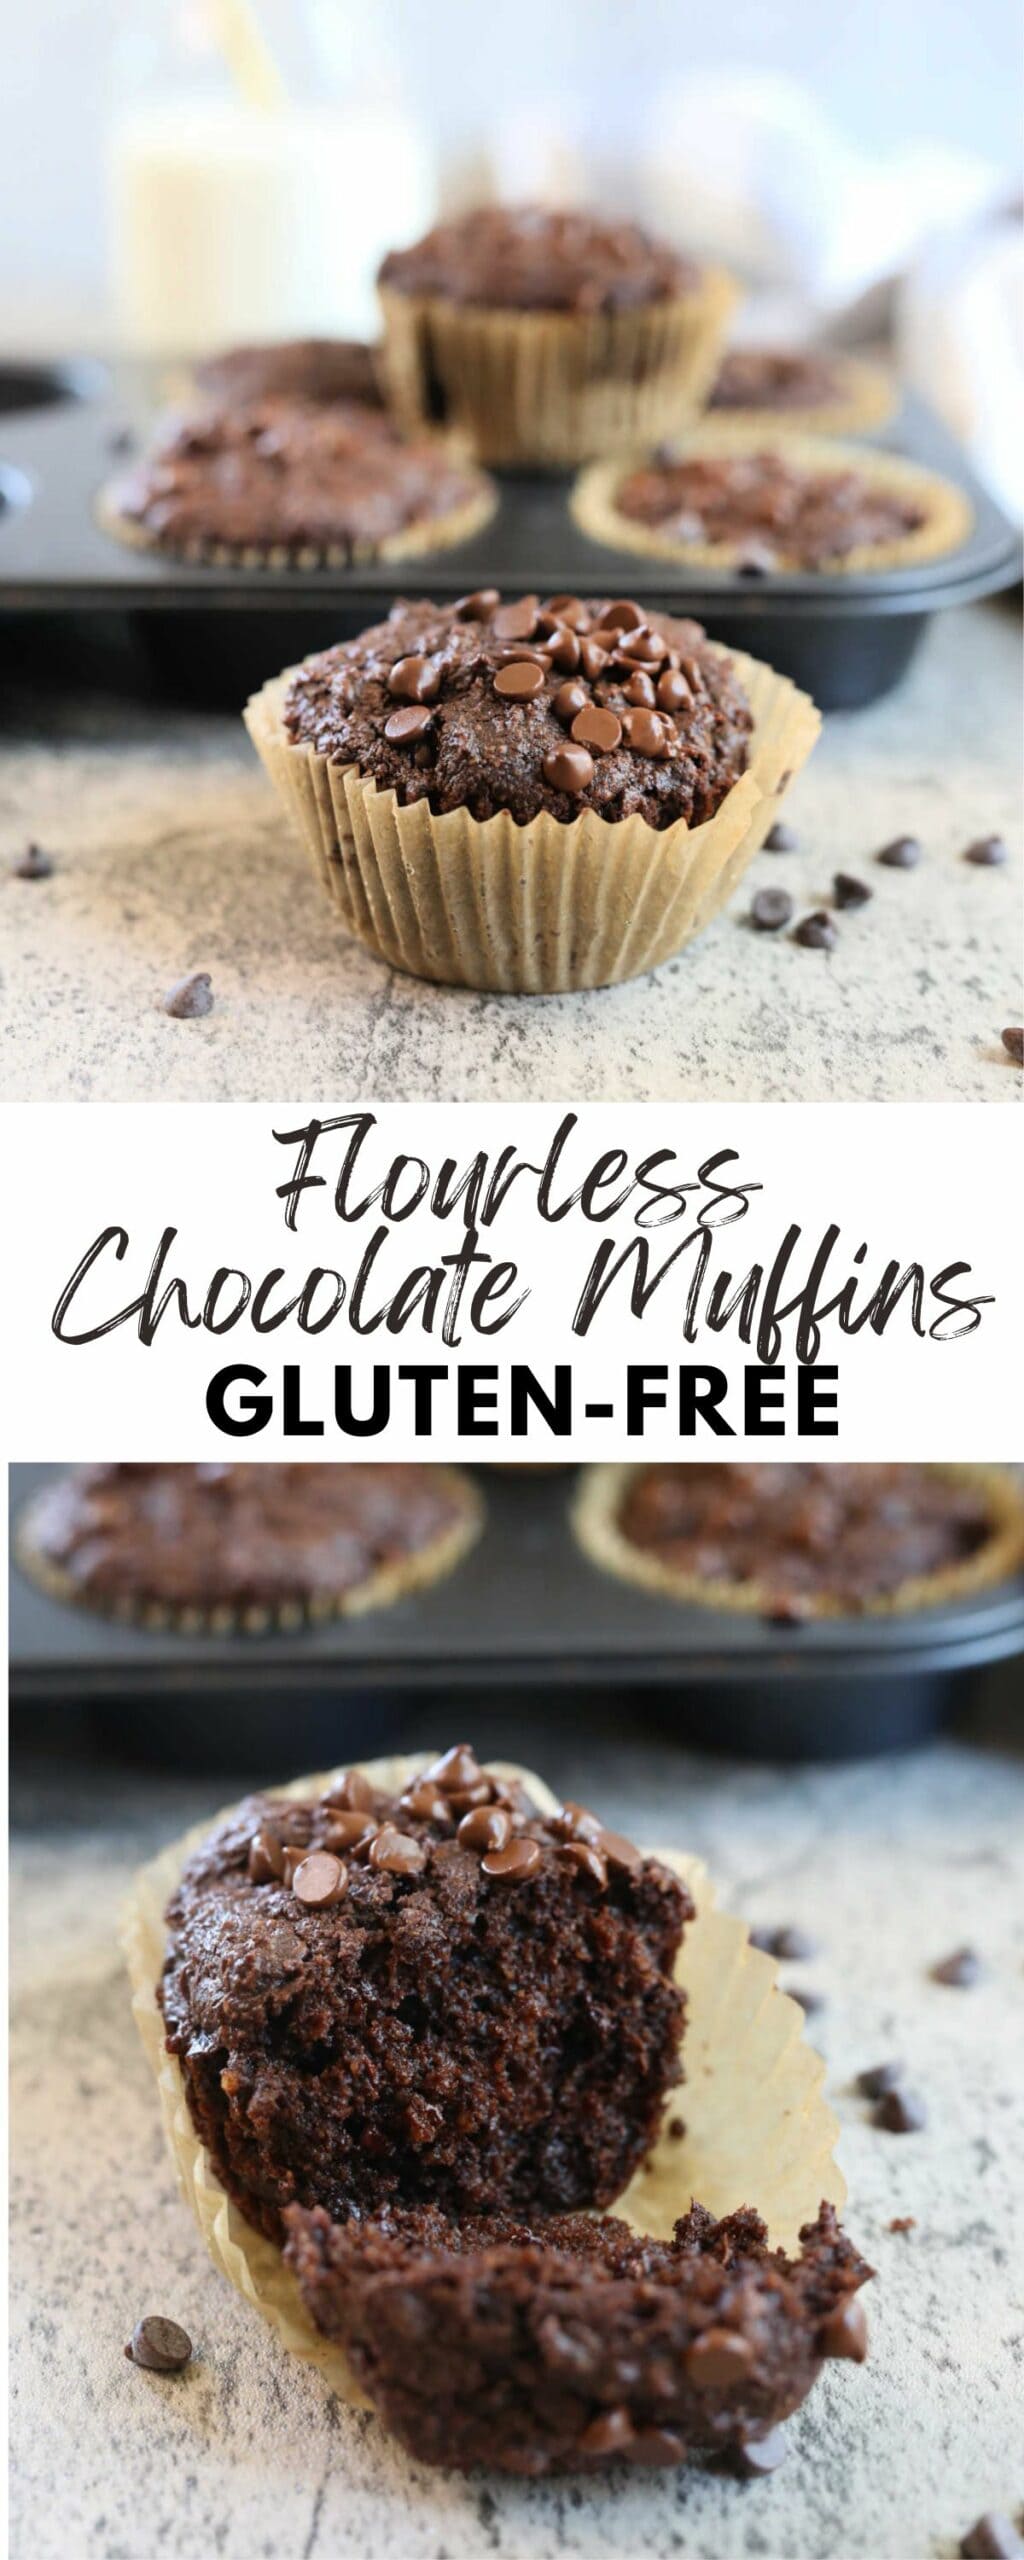 gluten-free flourless chocolate muffins recipe